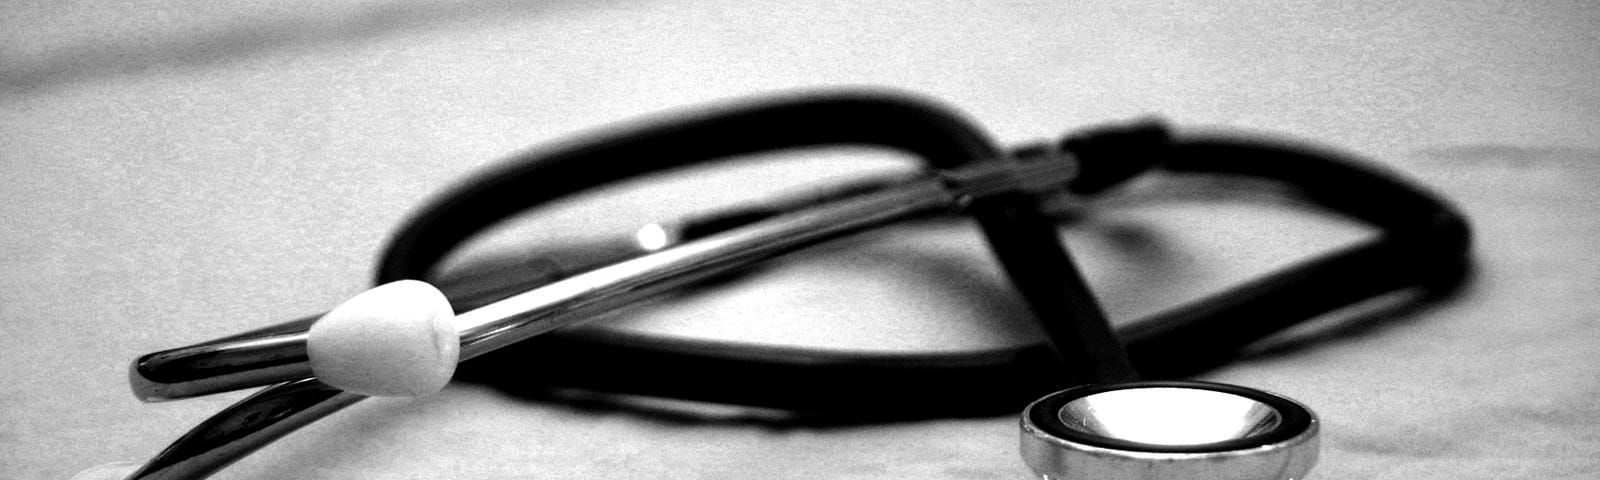 A stethoscope lying twisted on a sheet.